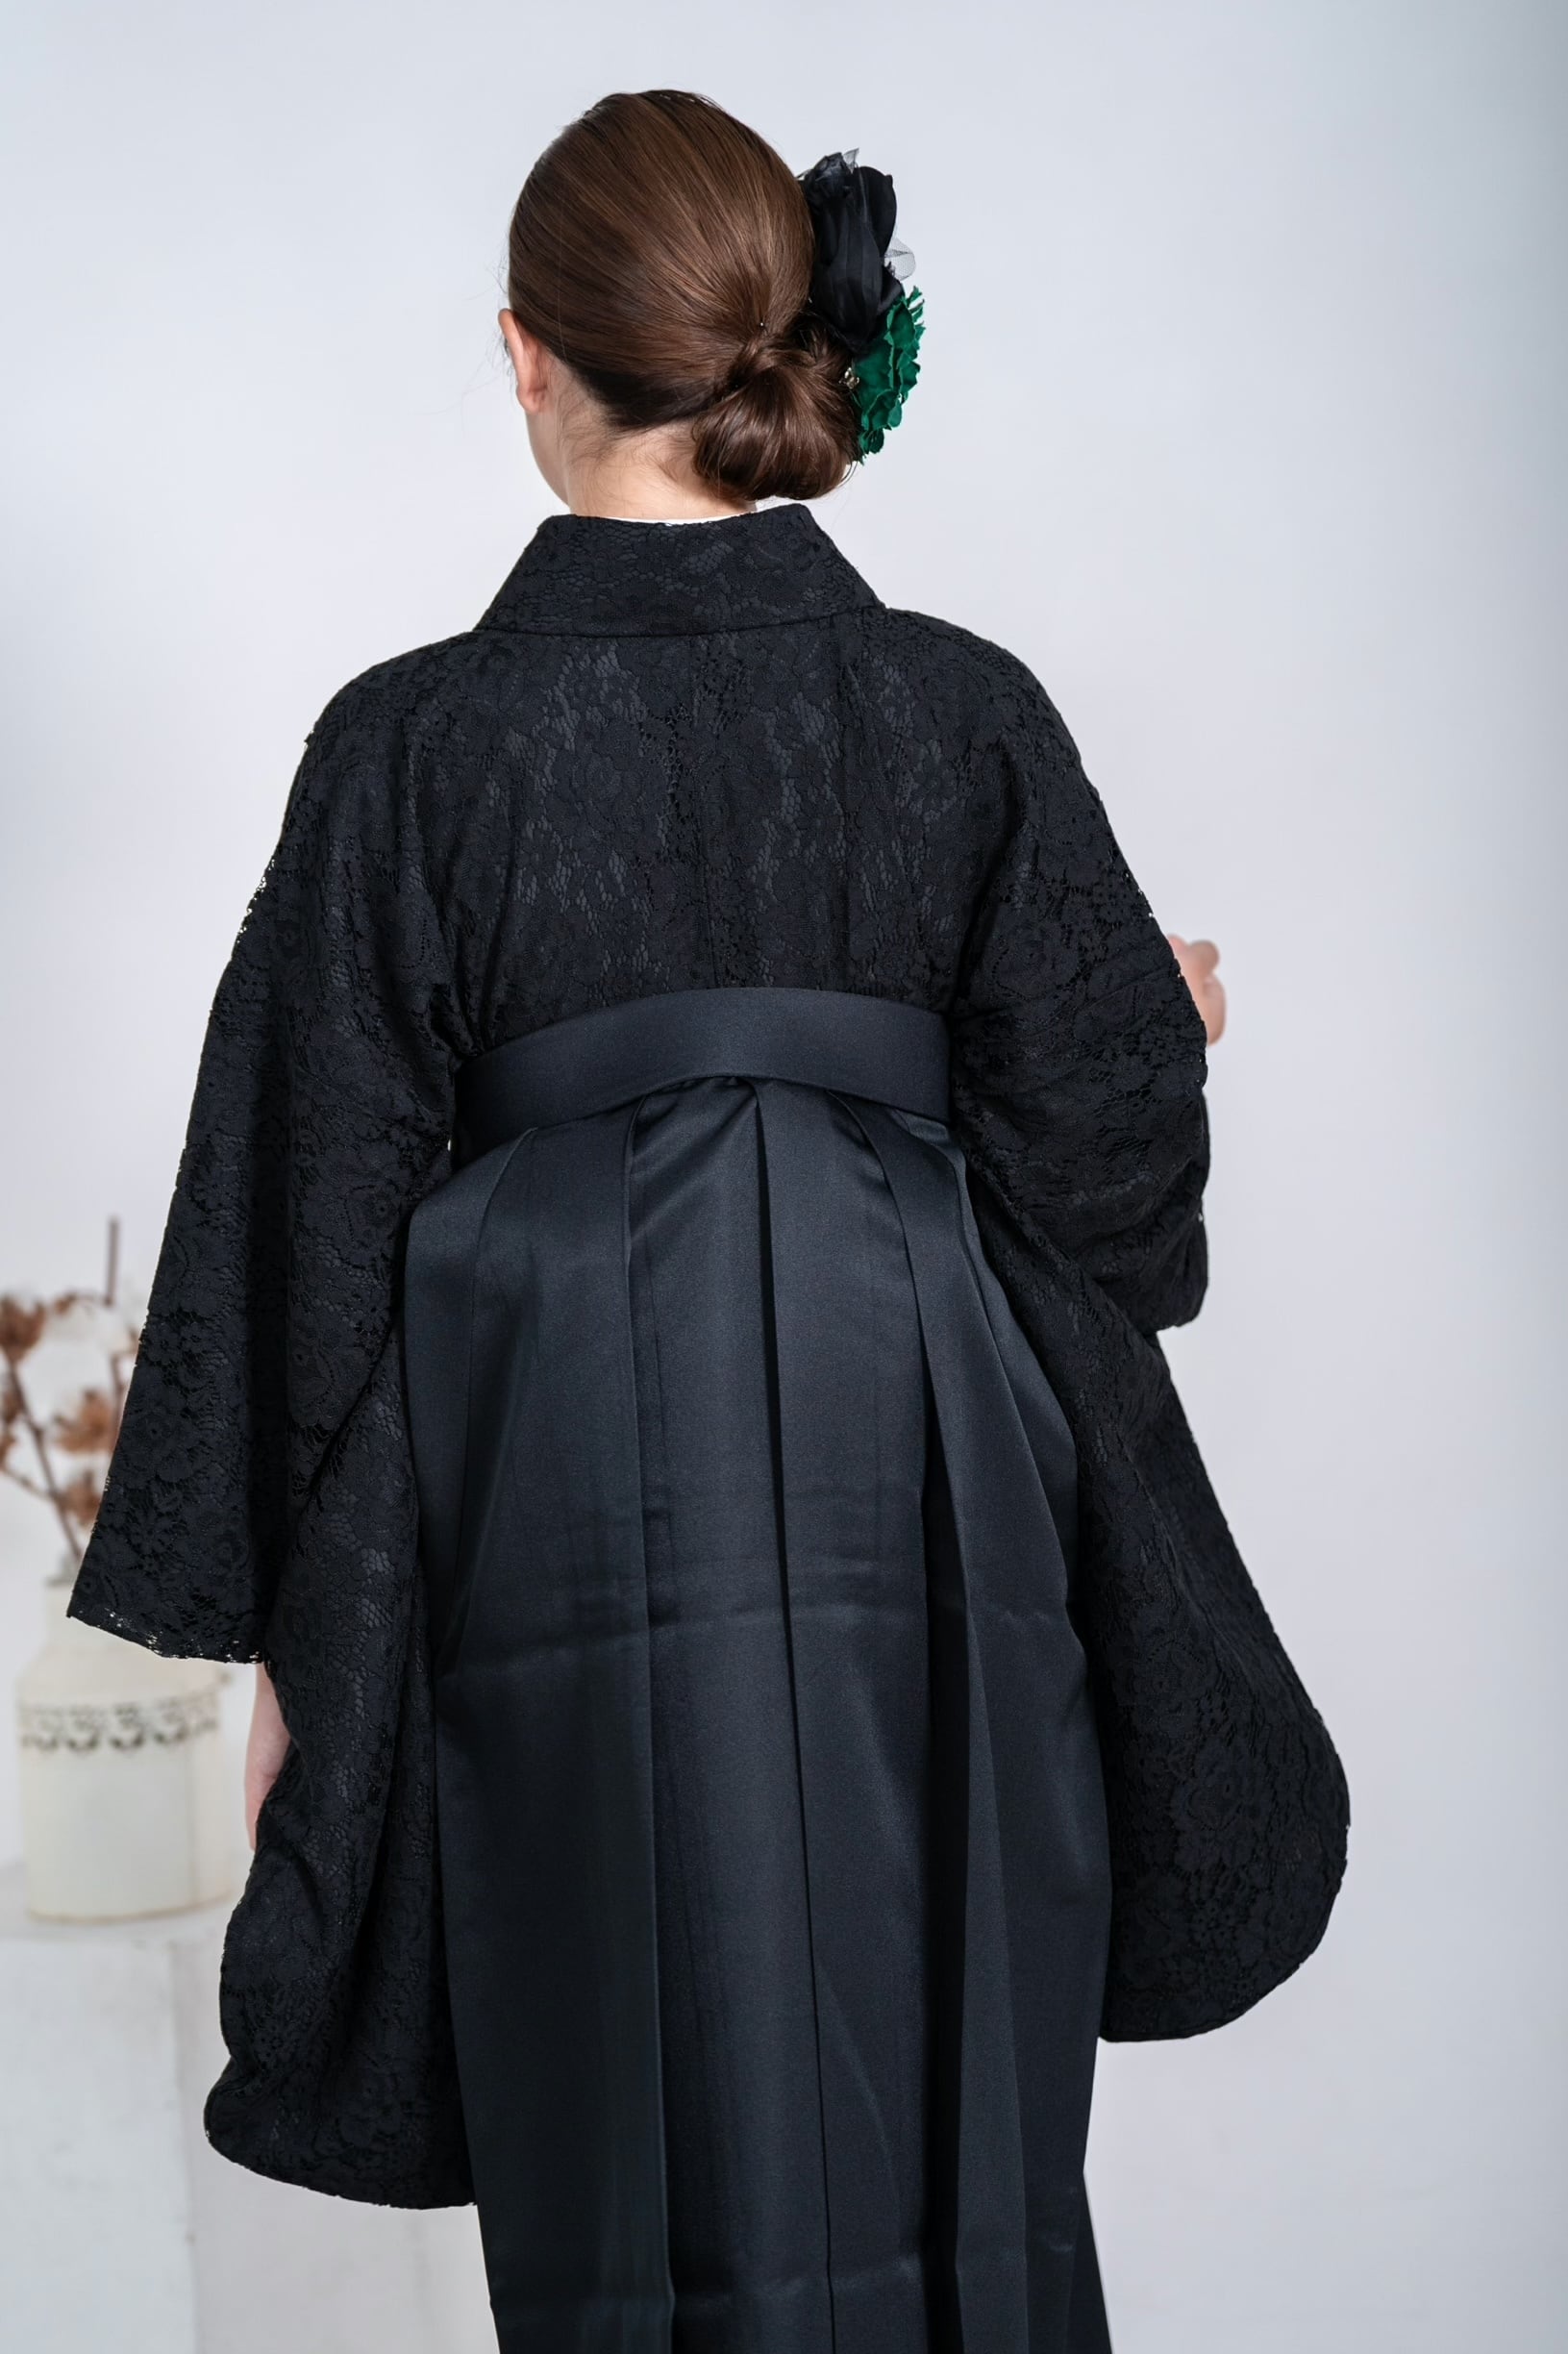 Kimono Sienne 卒業式袴3点セット 黒レース ブラック 黒コーデ二尺袖着物 袴 卒業式 | Kimono Sienne